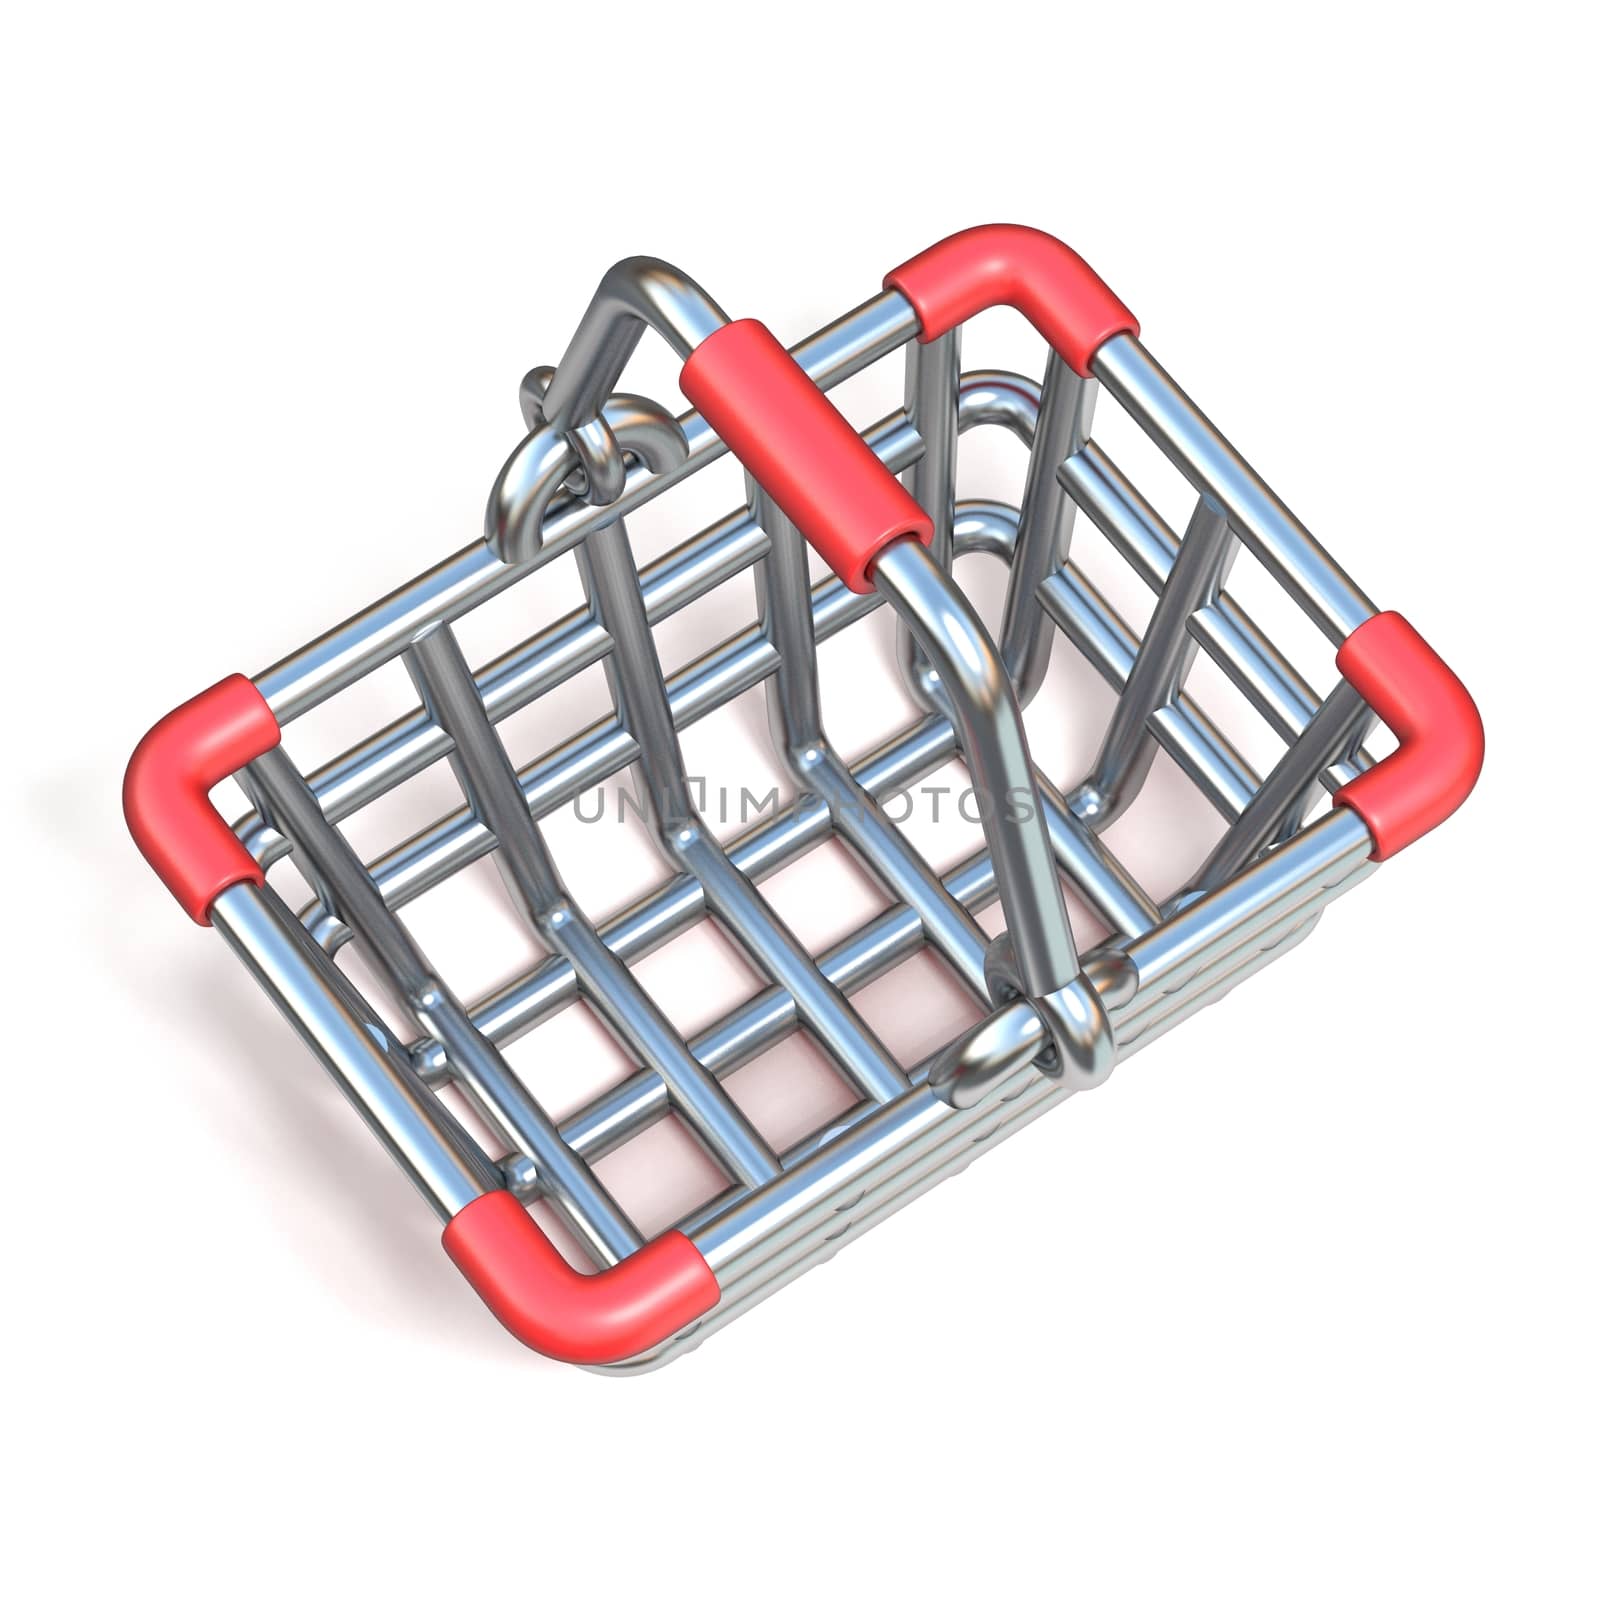 Steel wire shopping basket cartoon icon 3D by djmilic